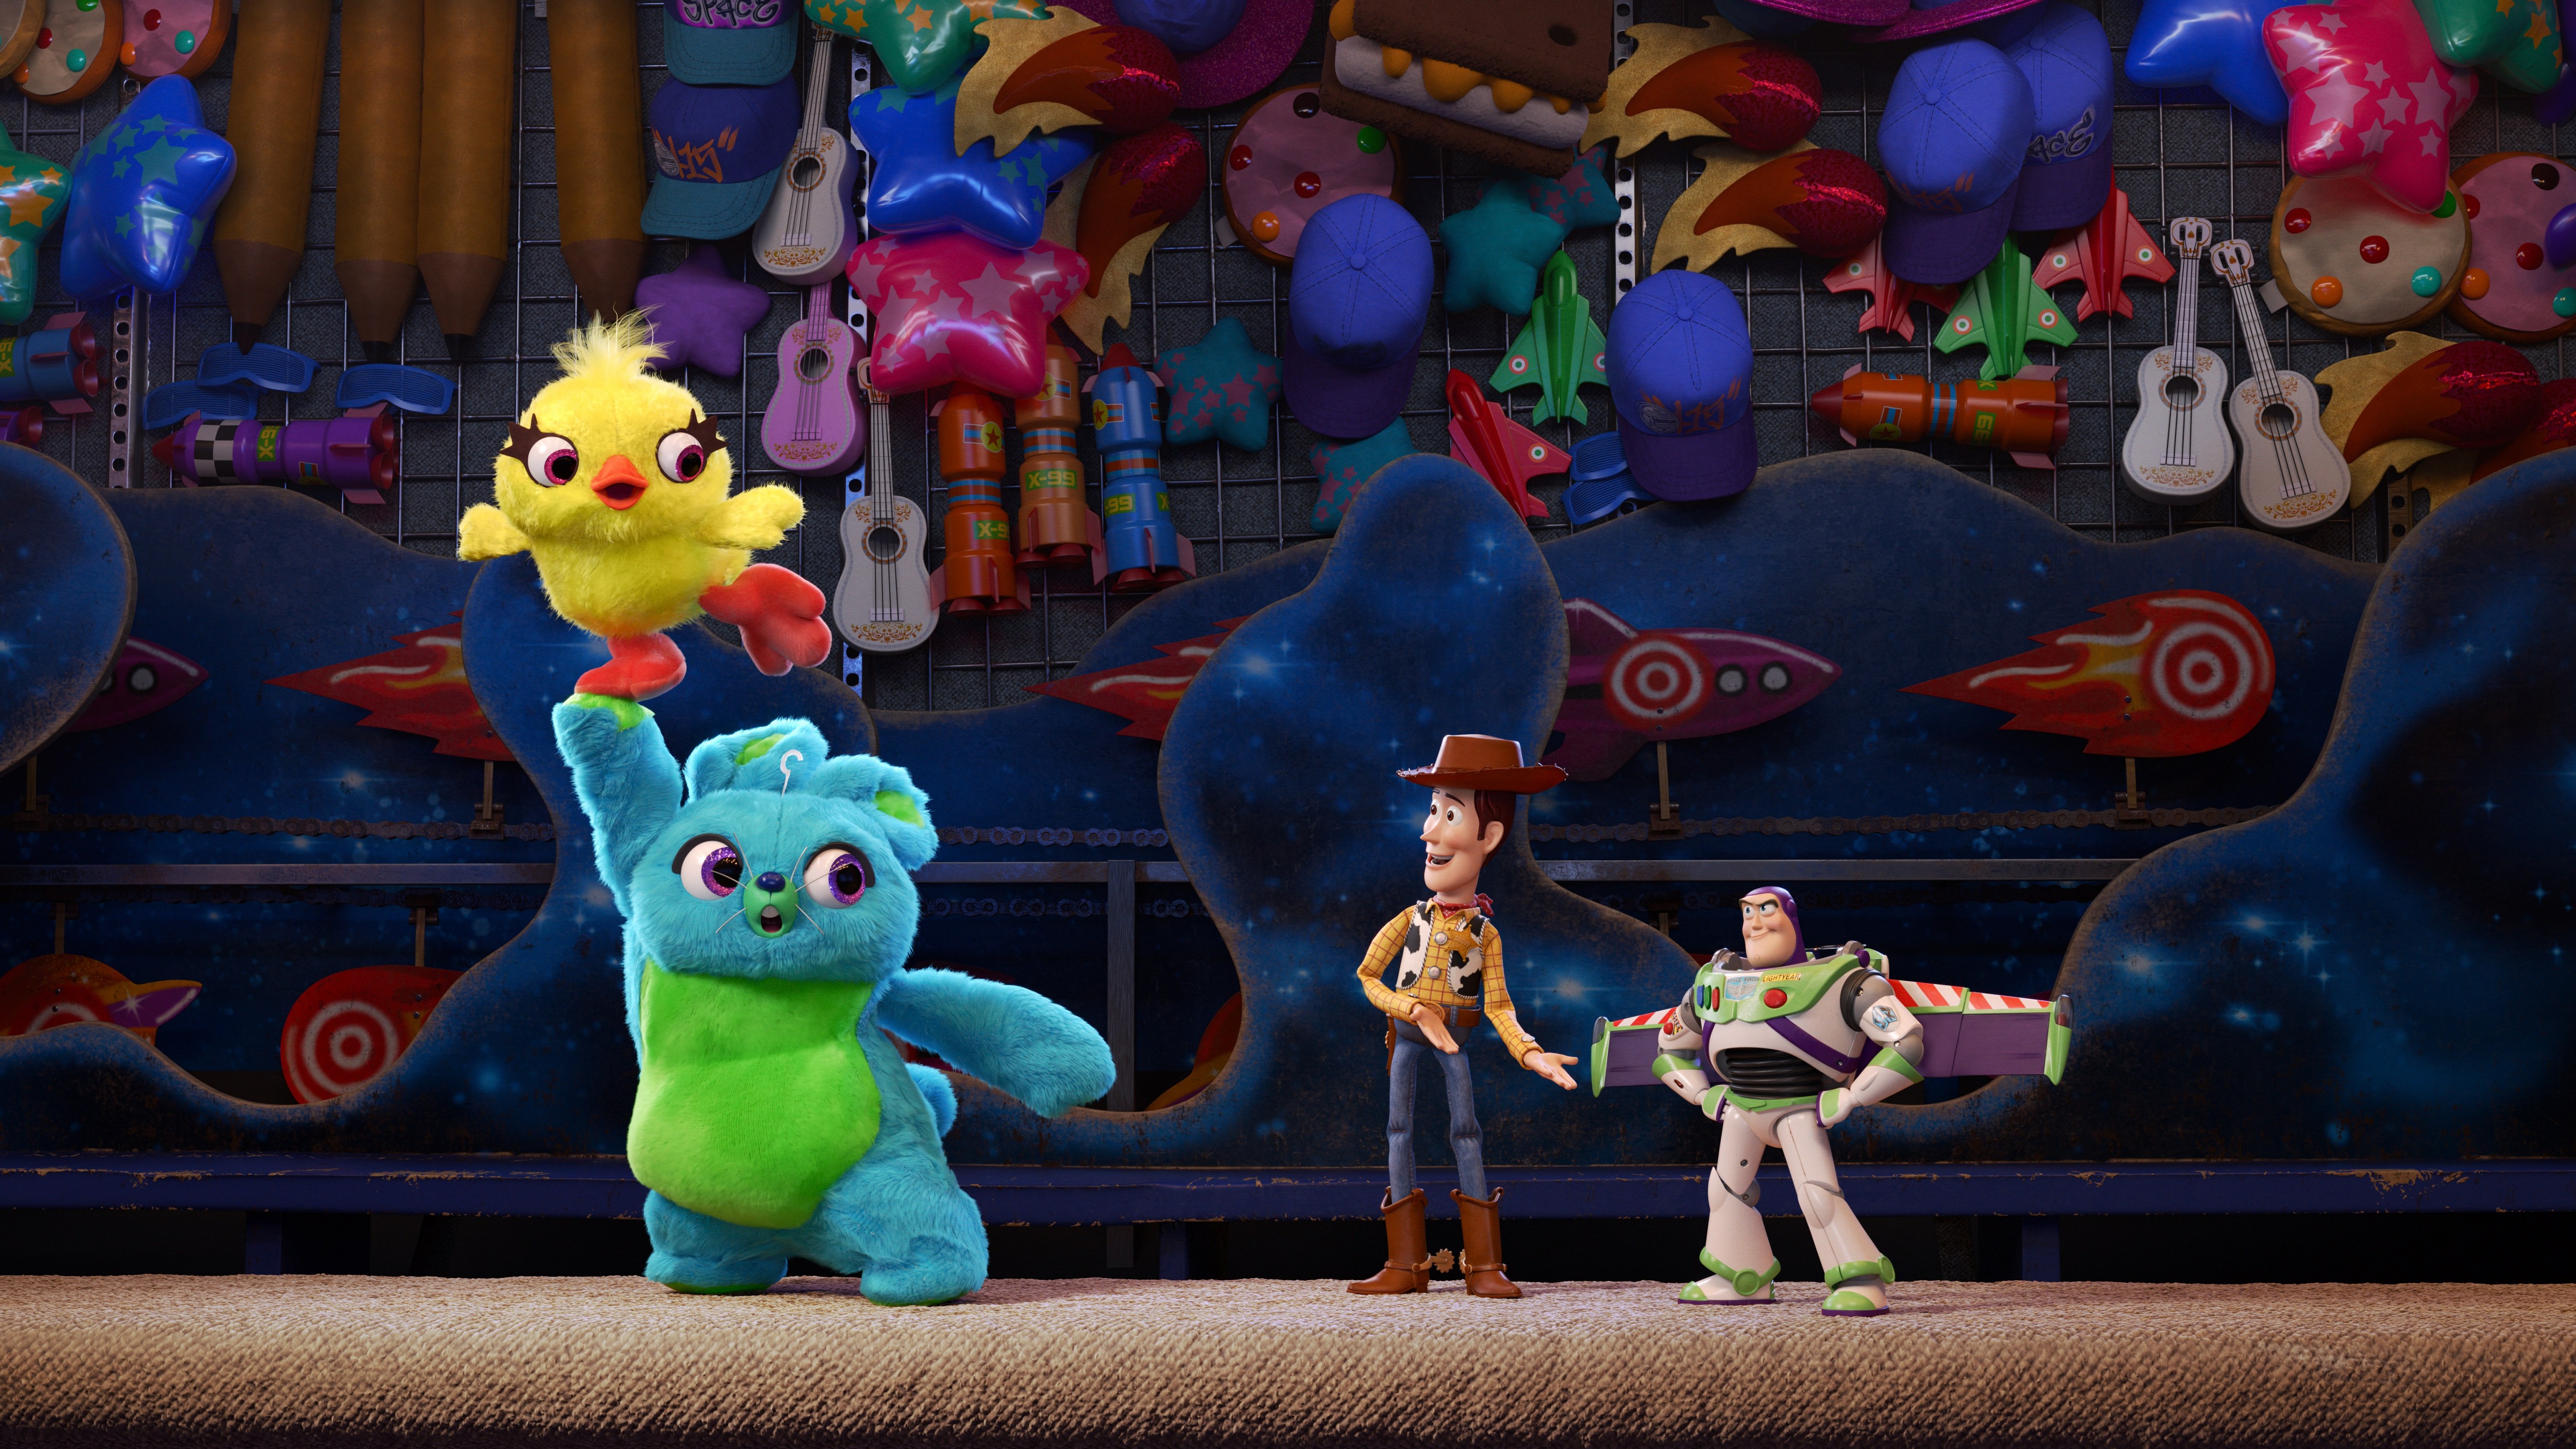 Sheriff Woody Buzz Lightyear Animation Animated Movies 2019 5120x2880